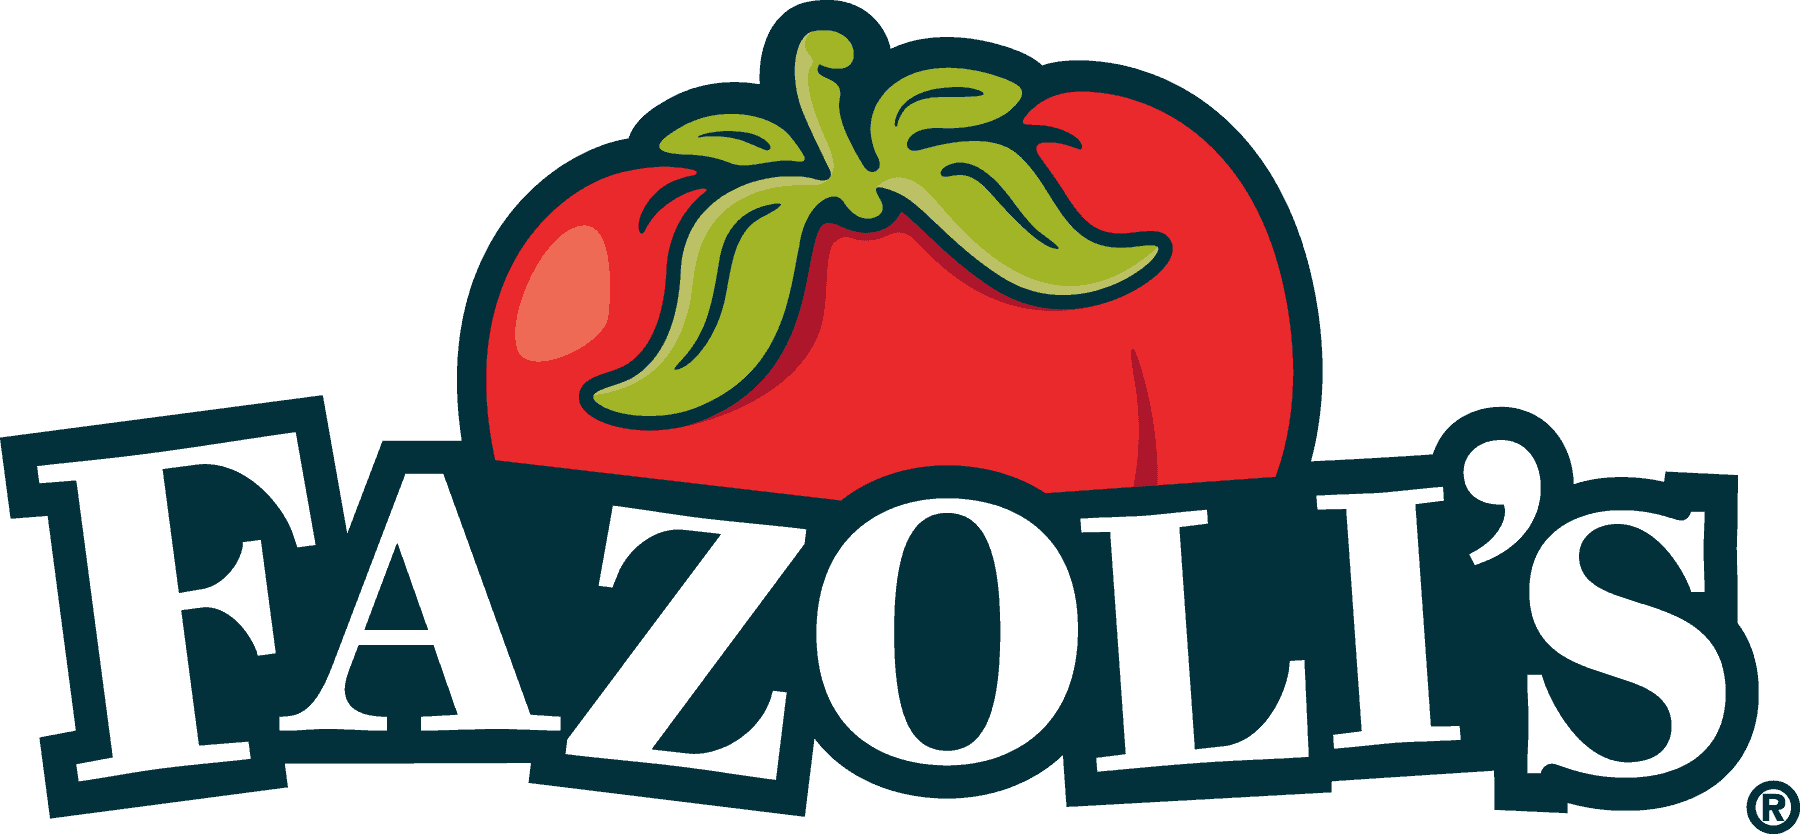 Fazoli's logo